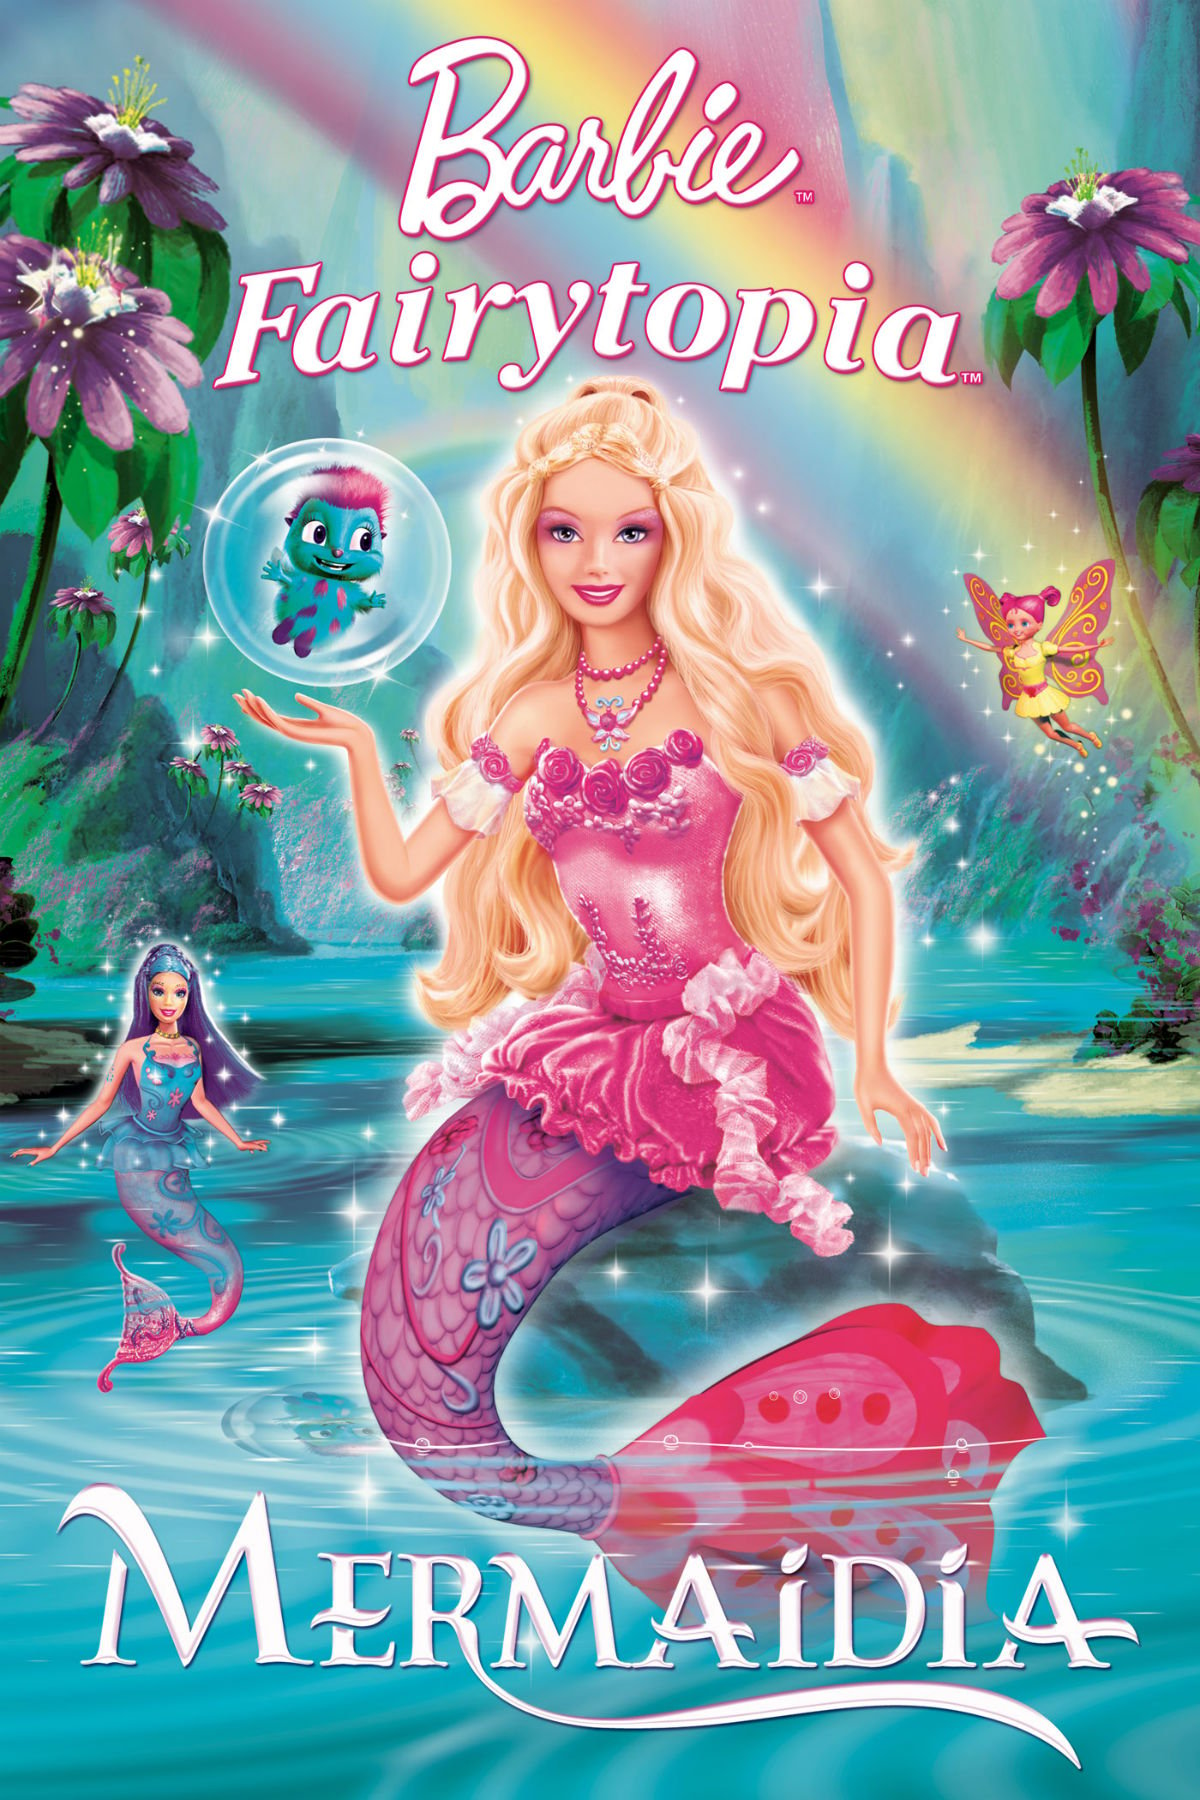 Barbie Fairytopia: Mermaidia - Film 2006 - FILMSTARTS.de